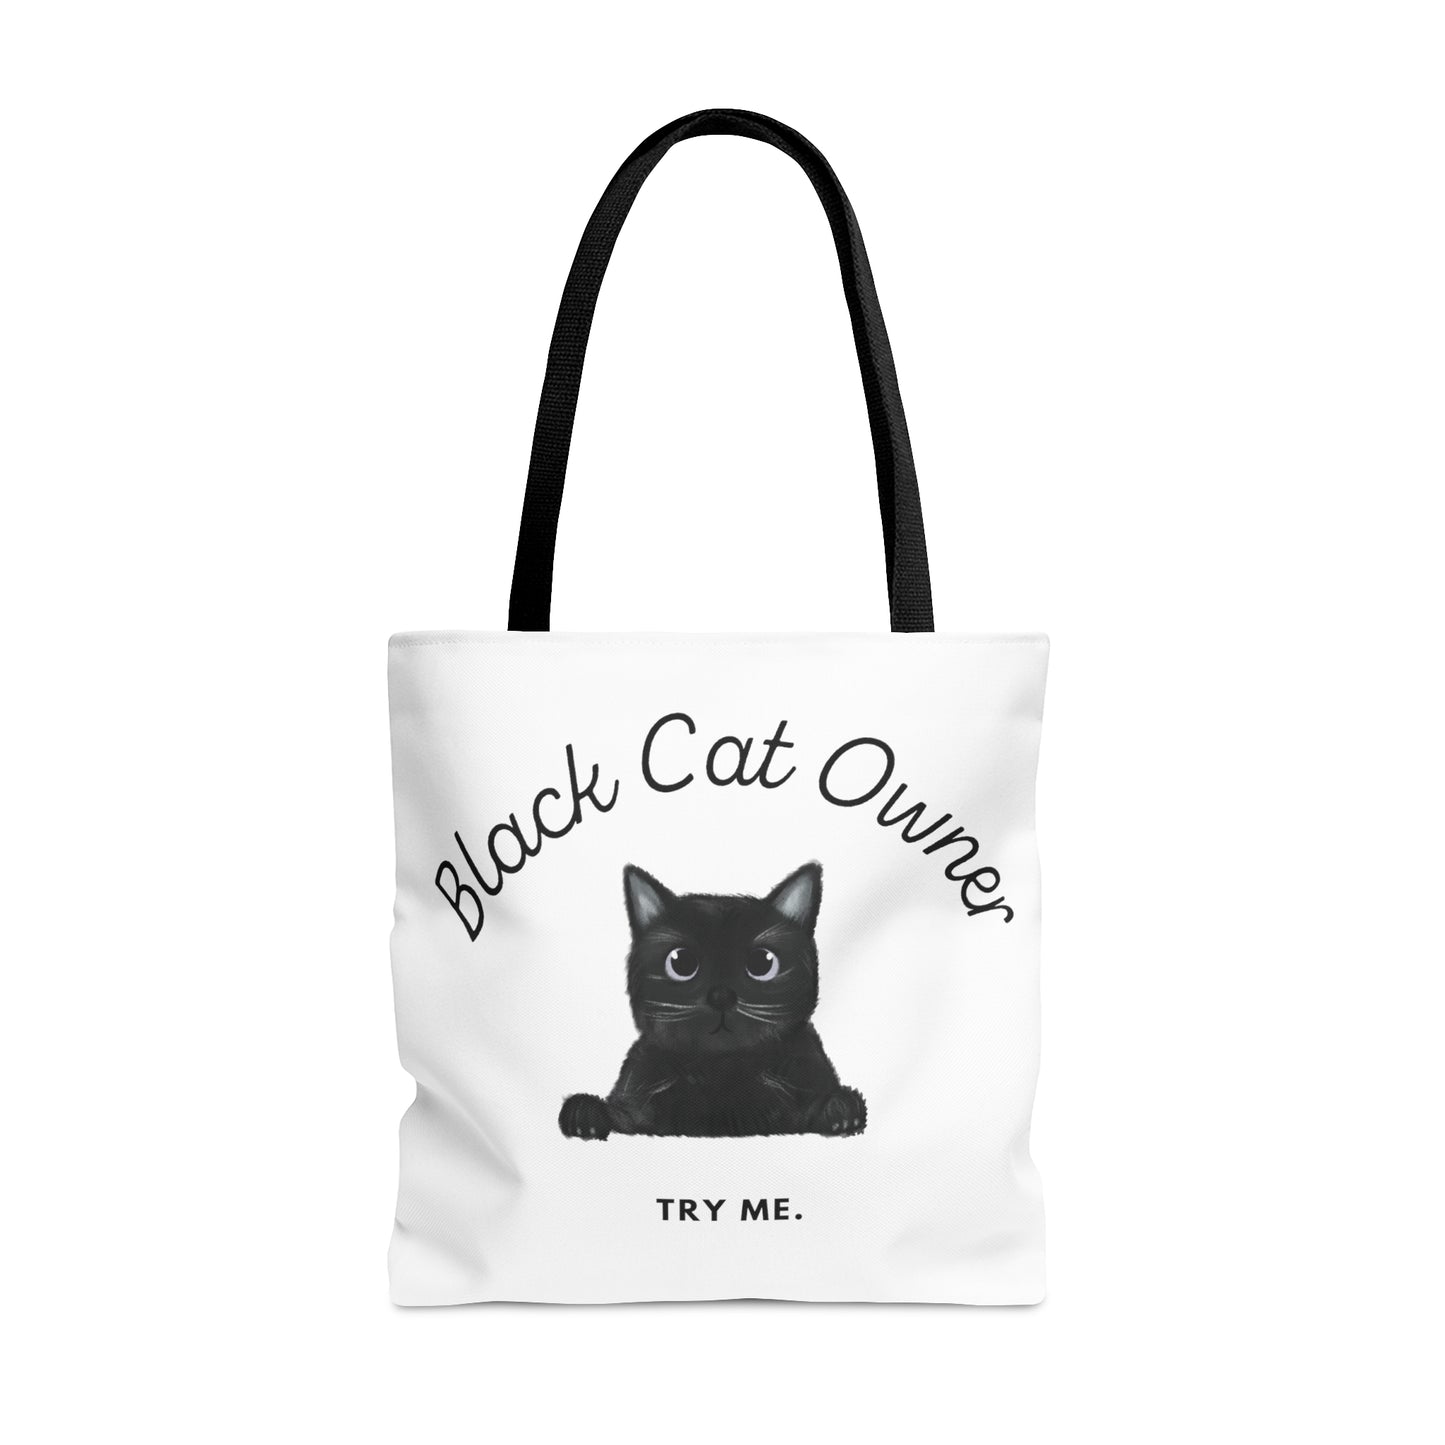 Black Cat Owner.  TRY ME. Tote Bag